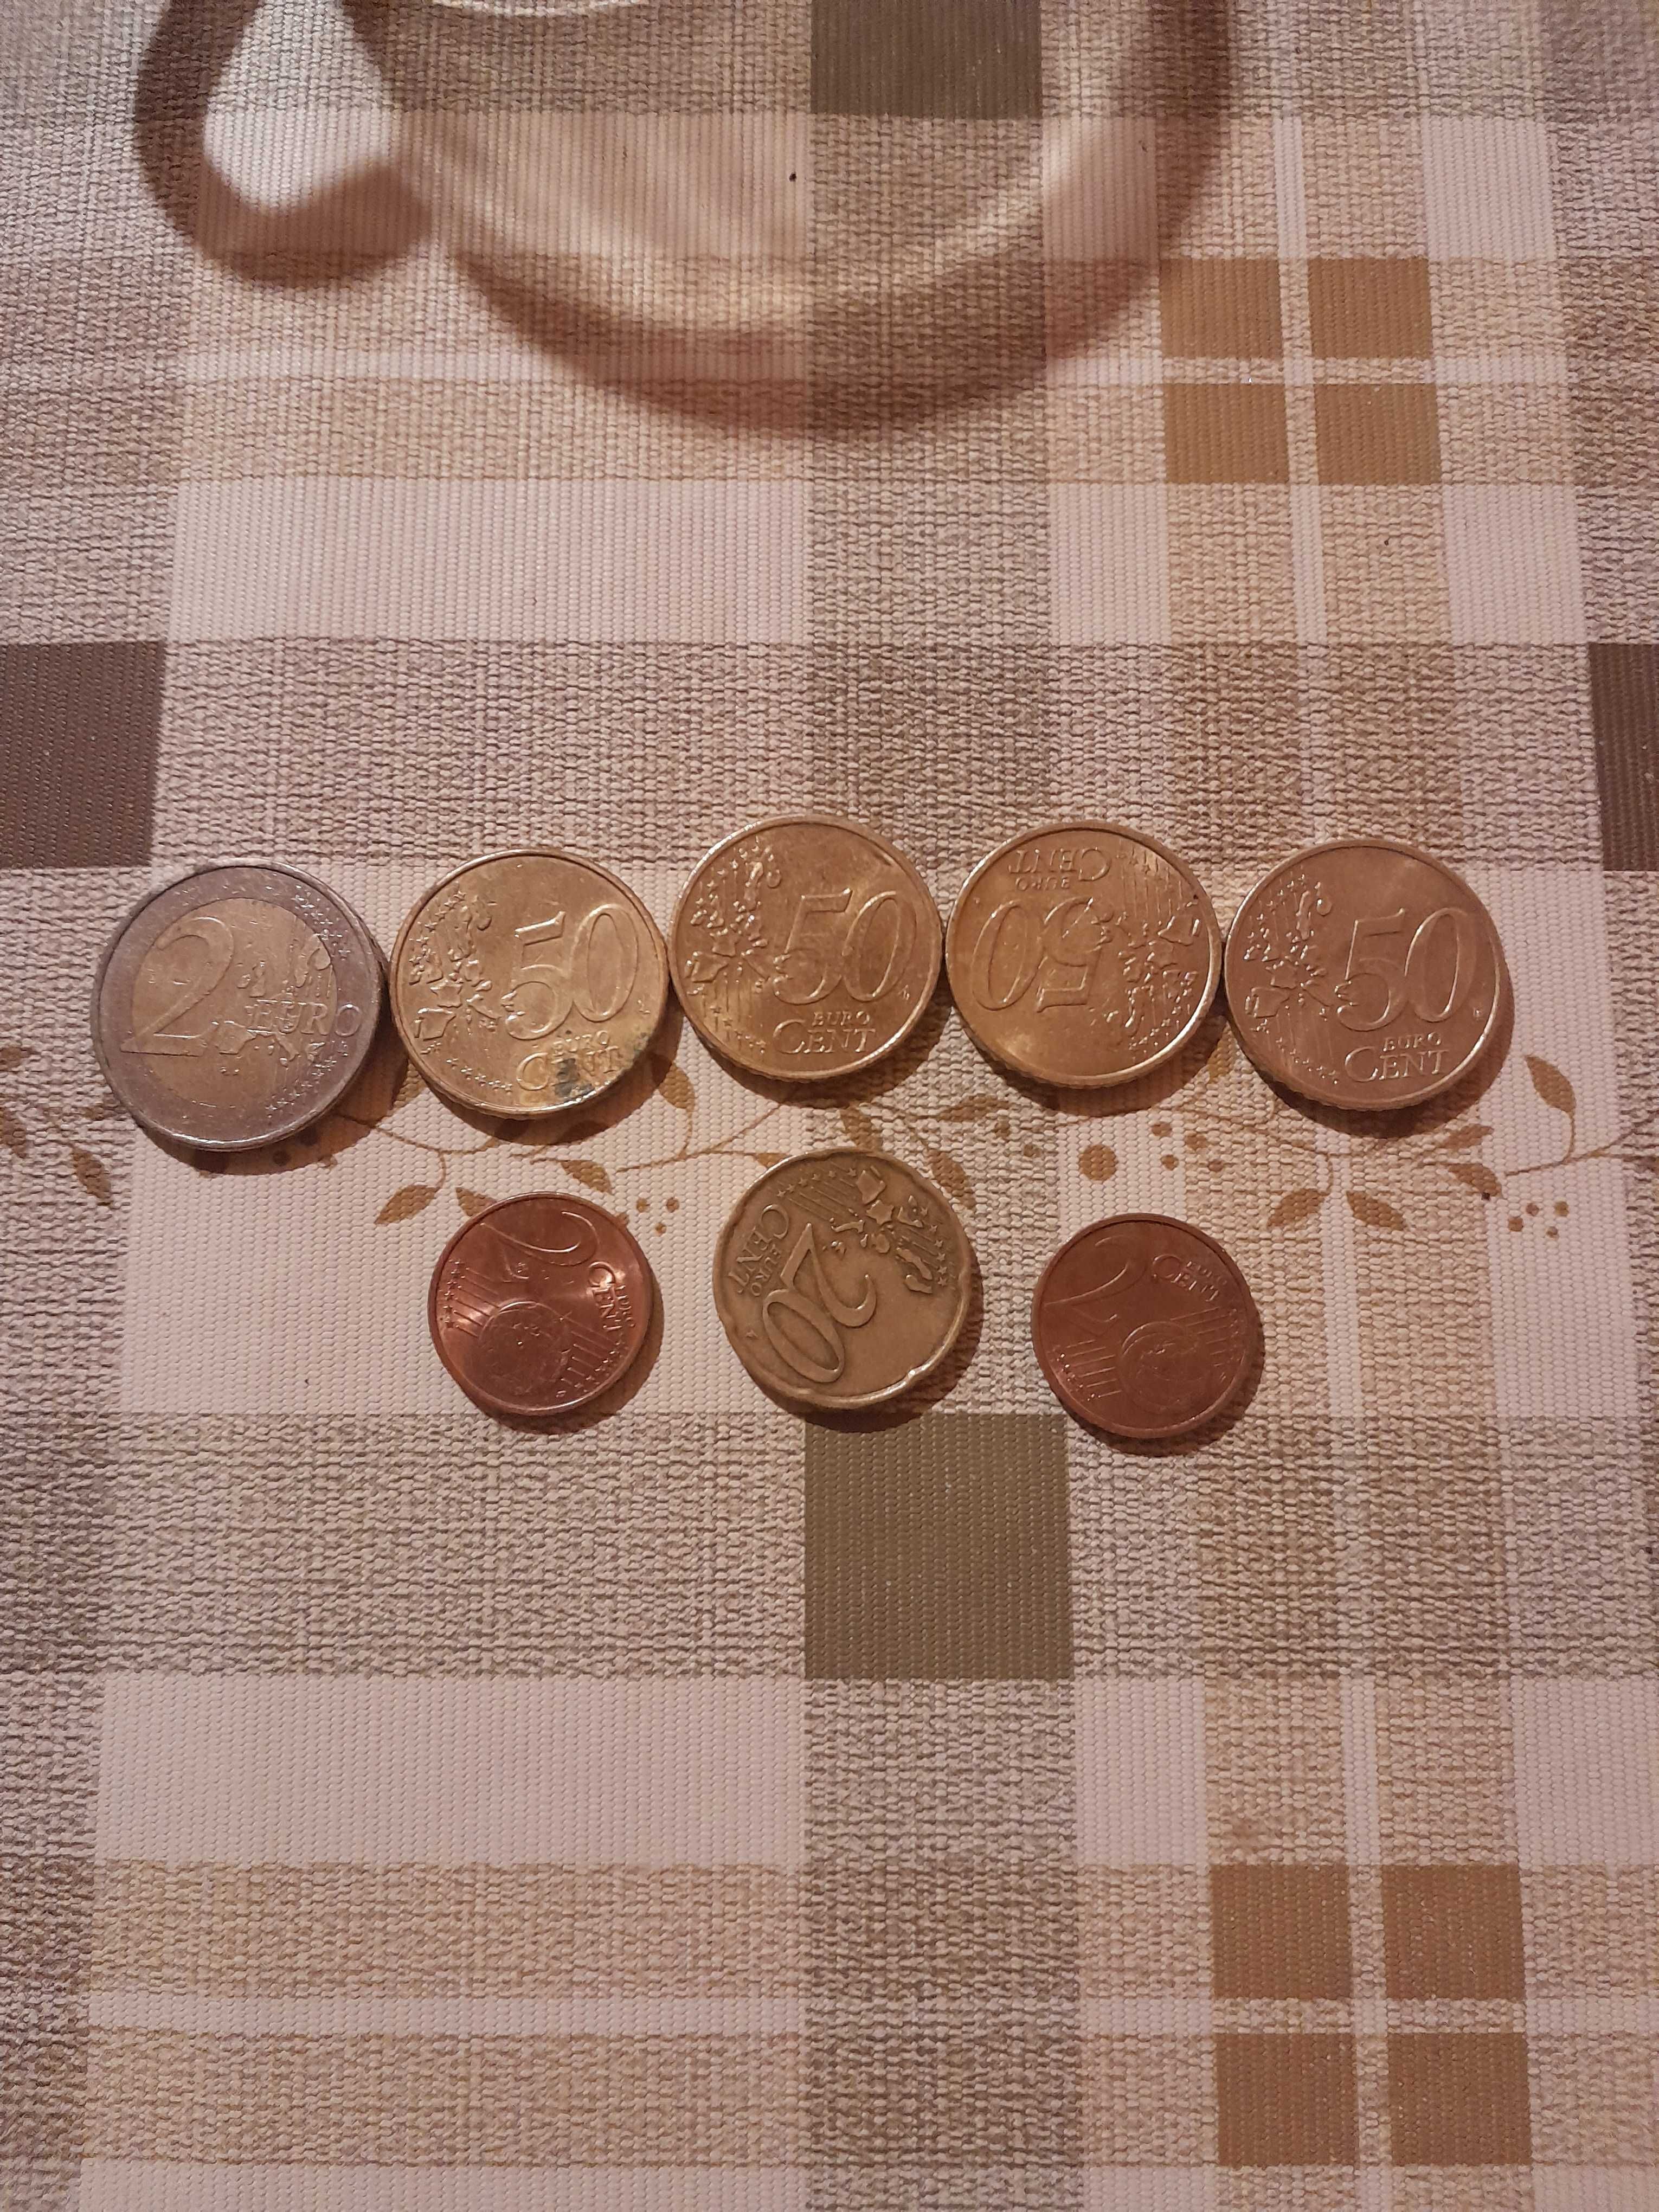 Vand monede euro vechi rare.